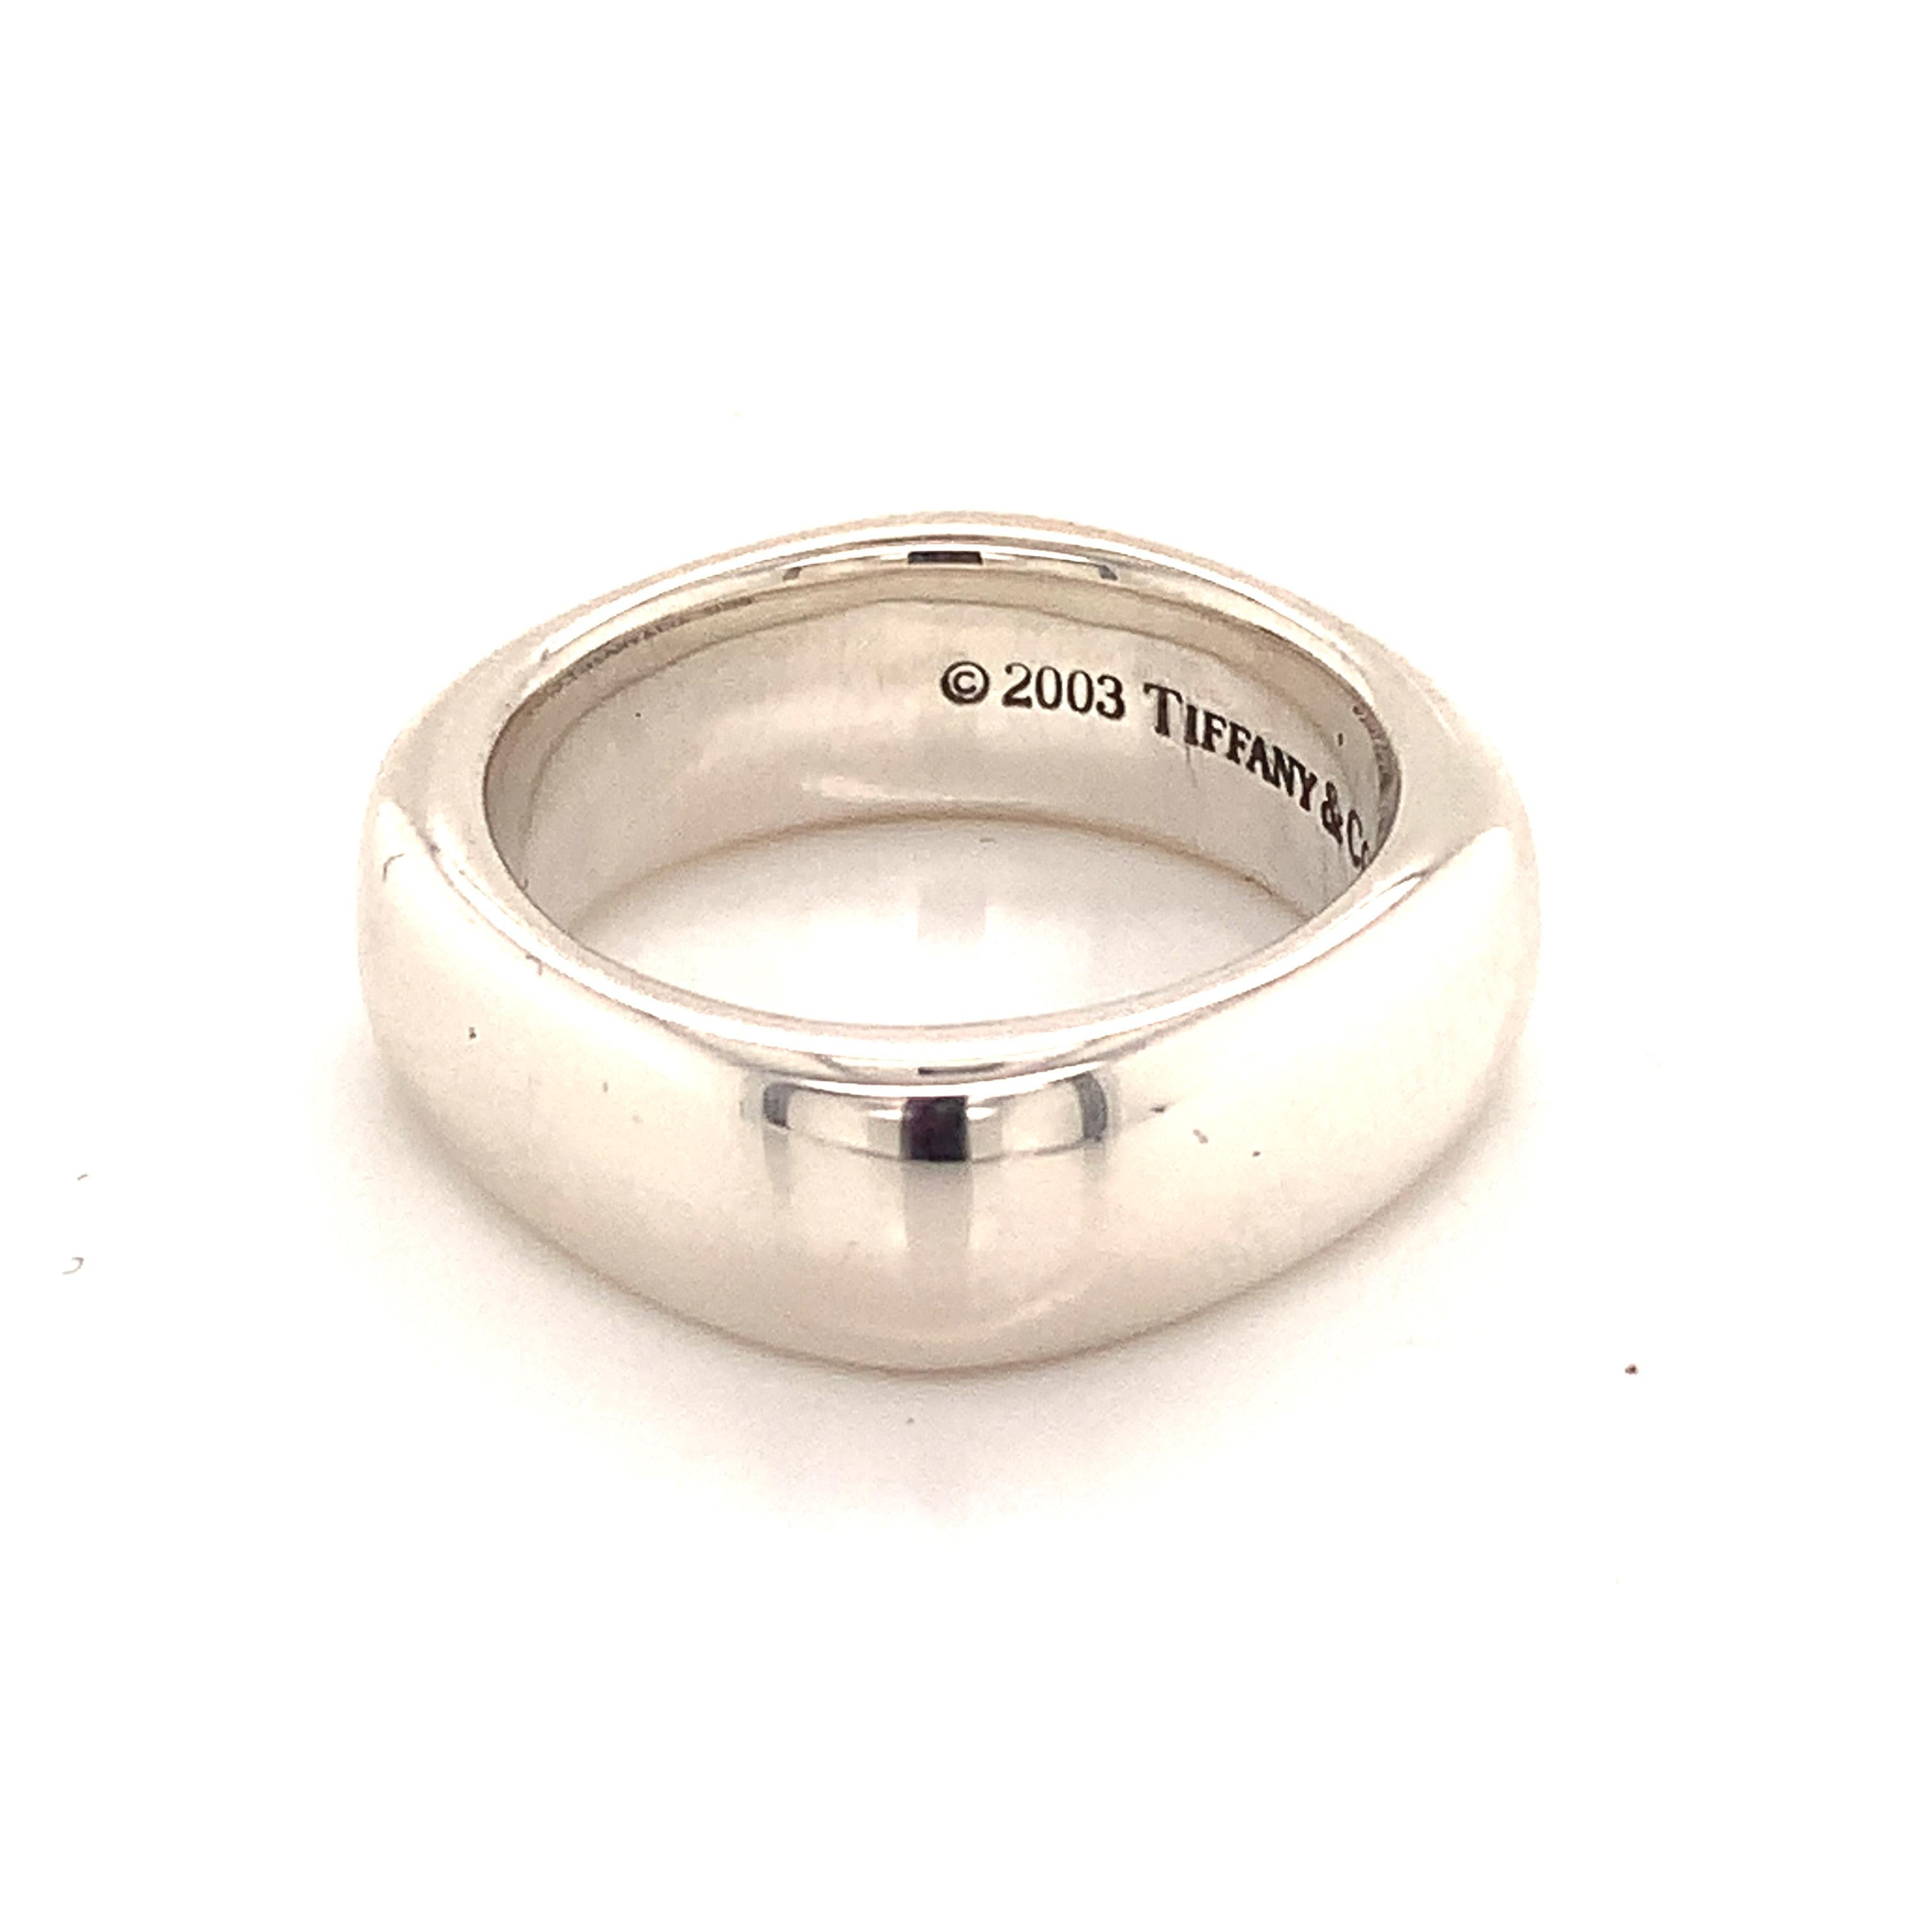 Tiffany & Co Estate Sterling Silver Men's Ring, 13.55g 3